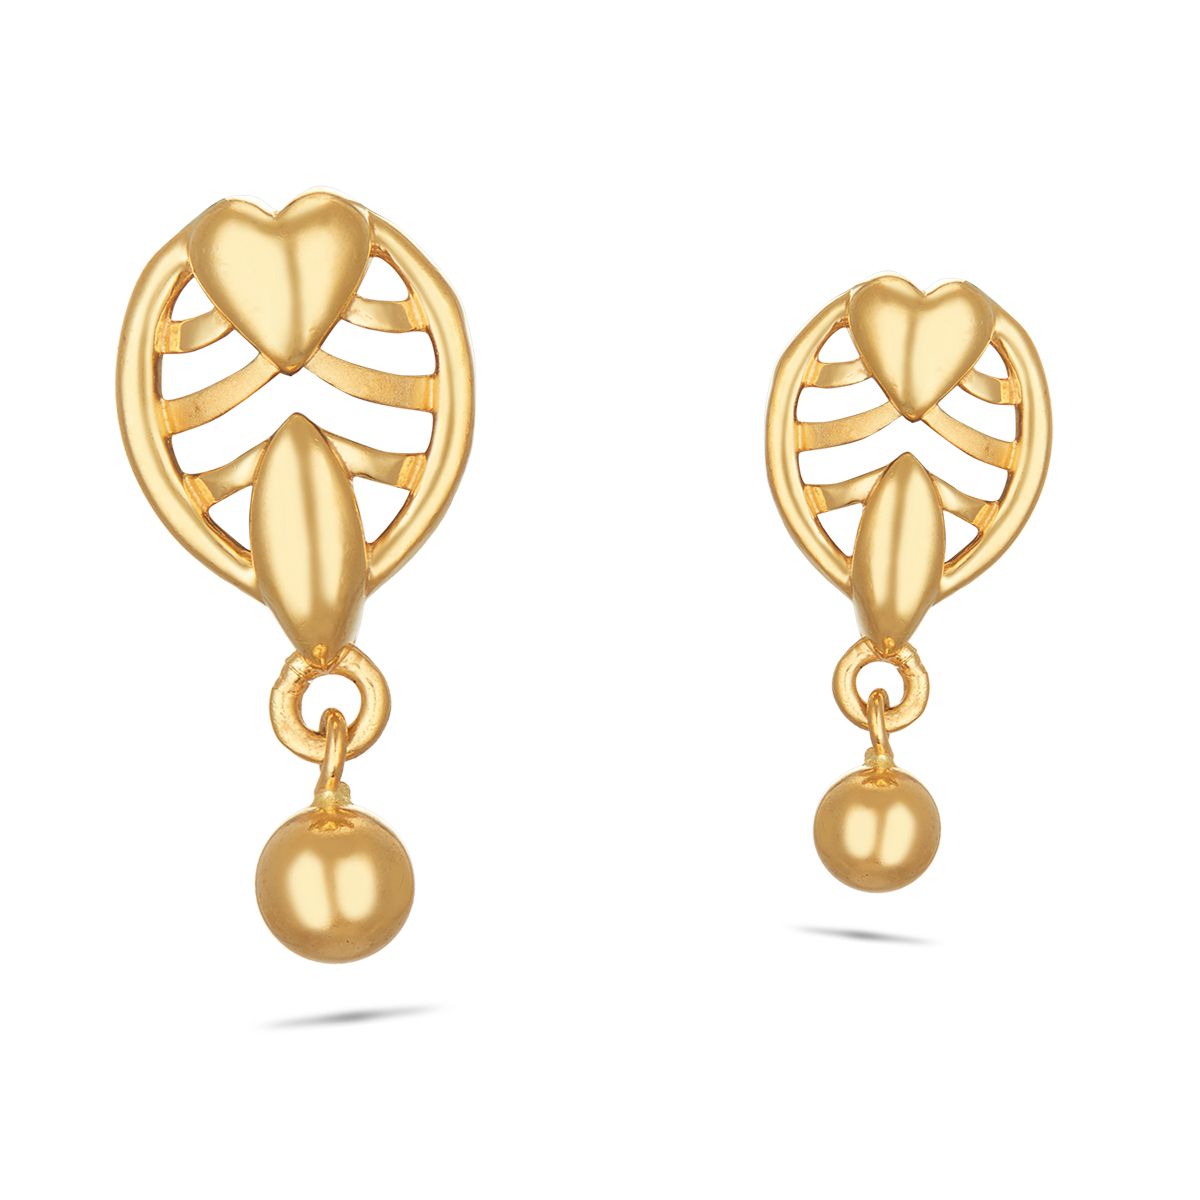 New Beautiful Designer Gold Earrings Designs - Light Weight Gold Earring...